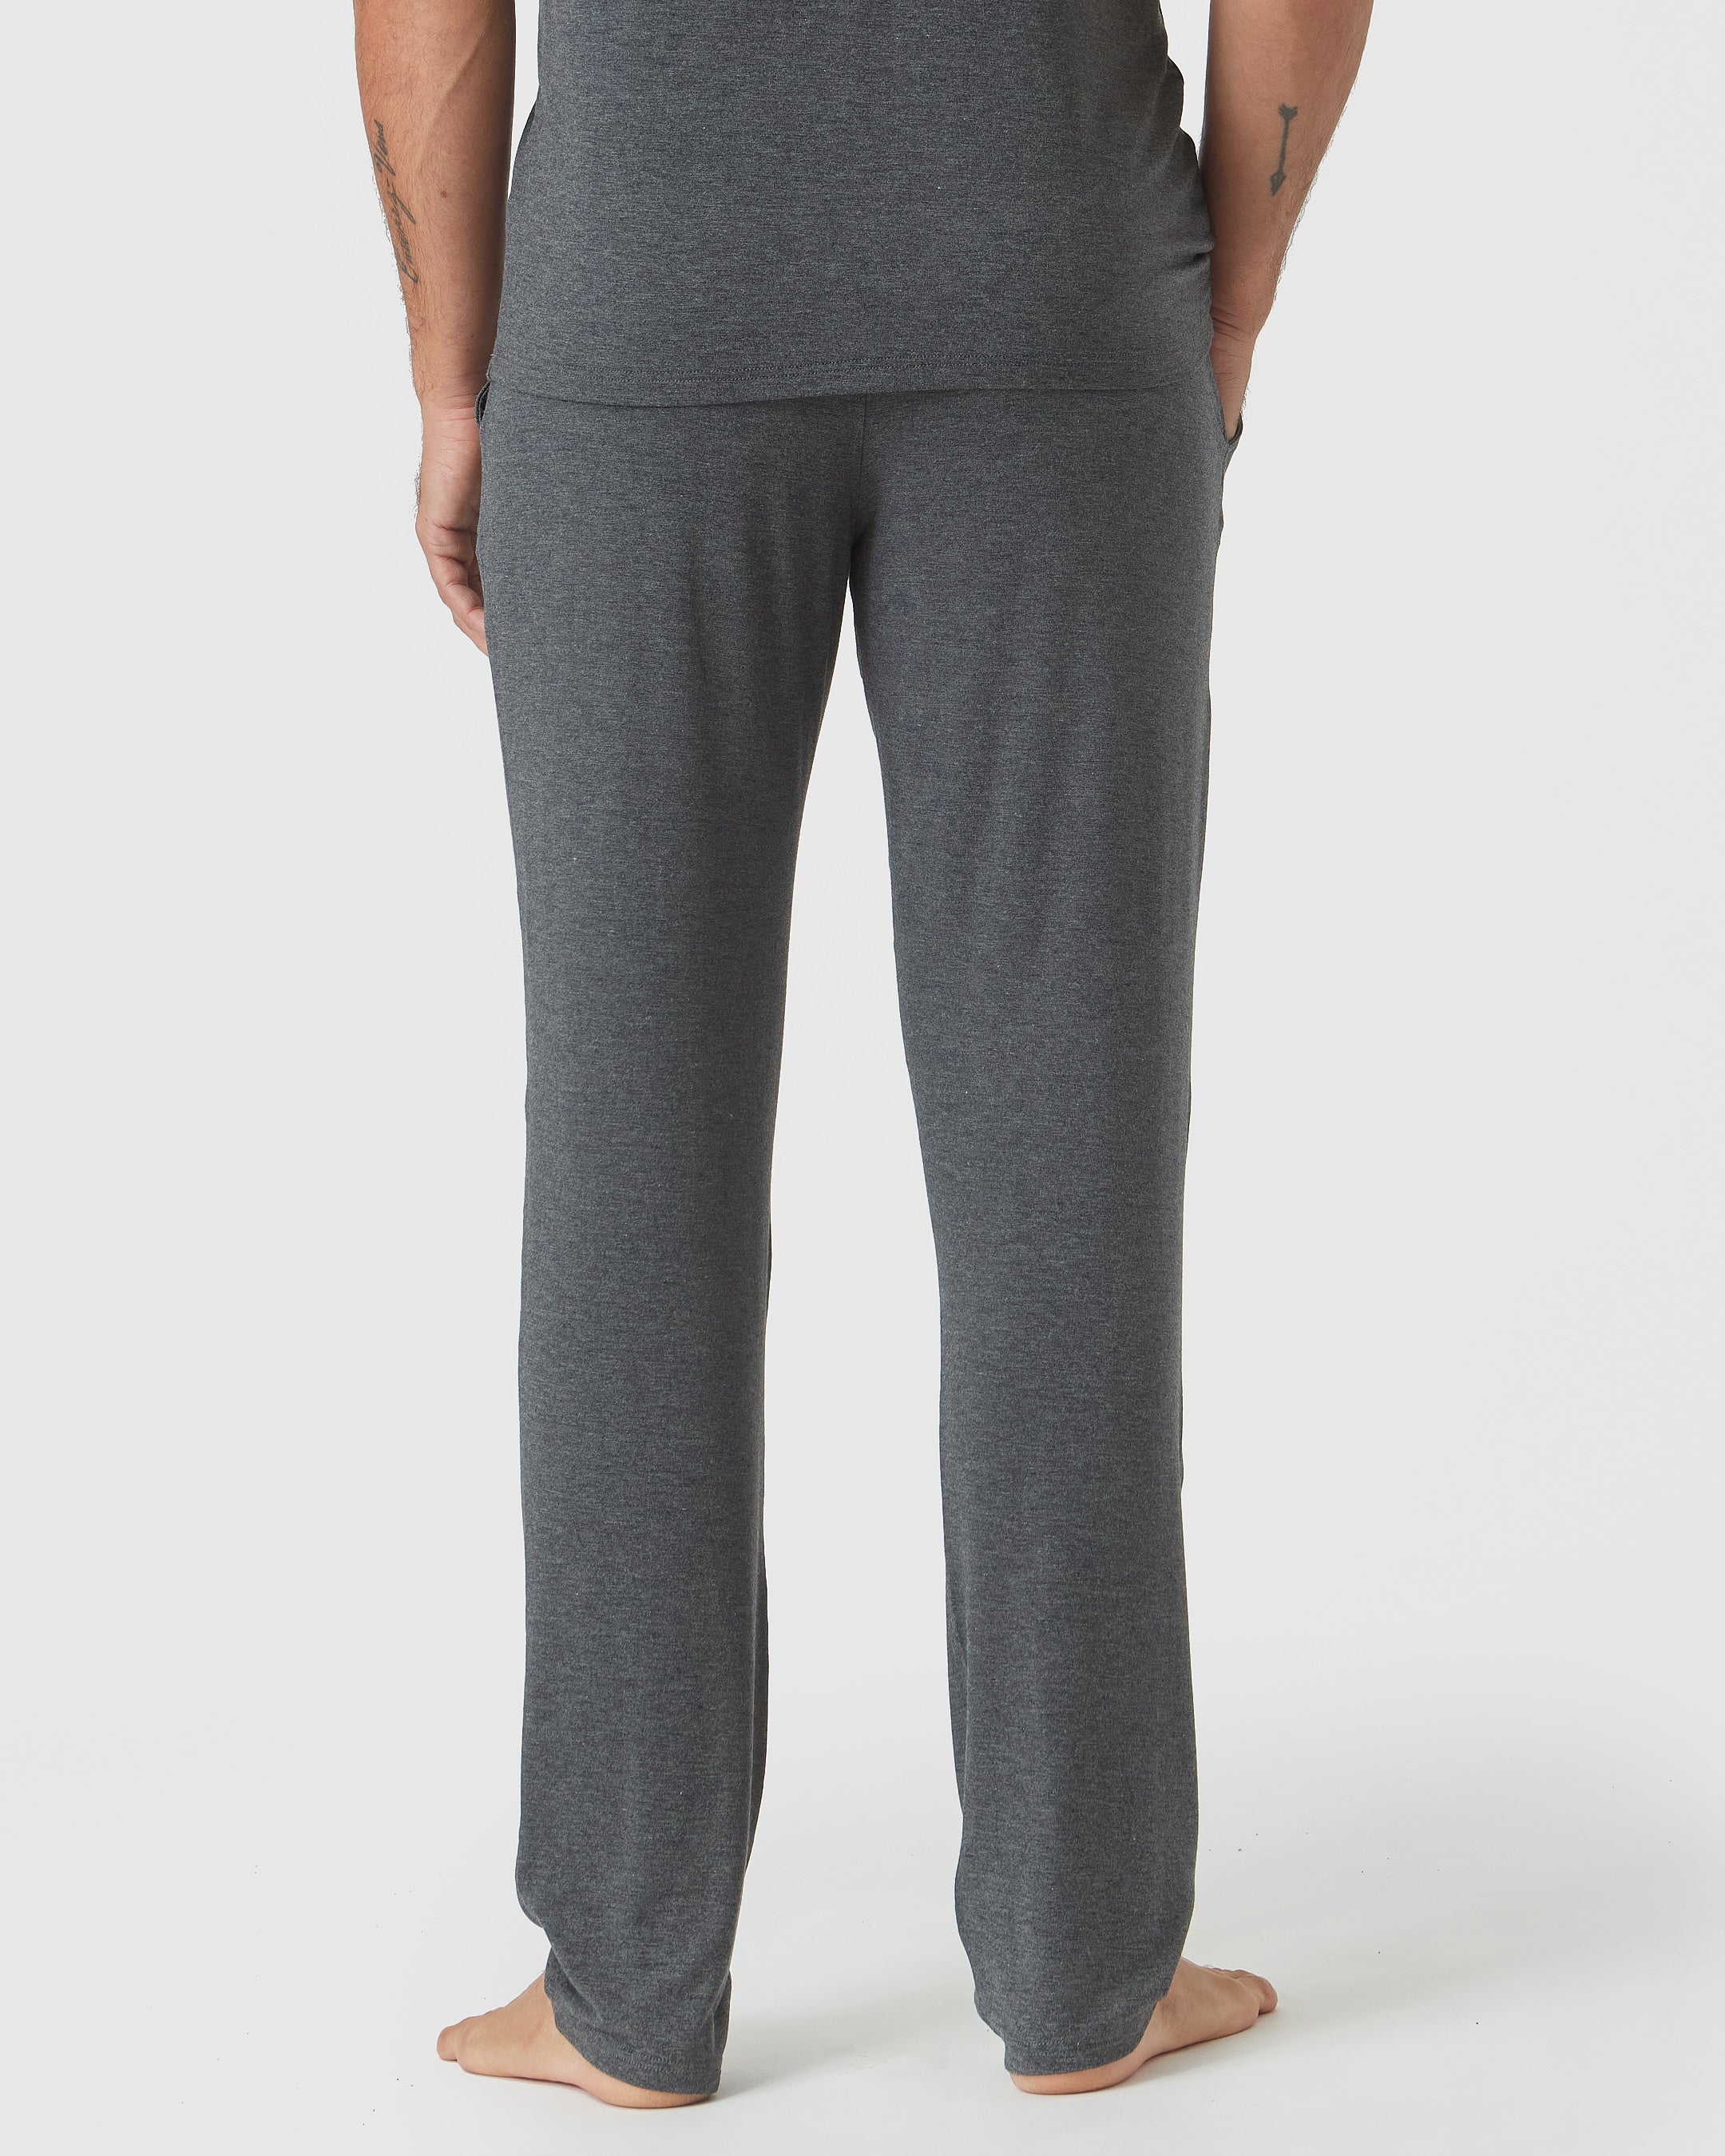 Charcoal Heather Gray Loungewear Pant